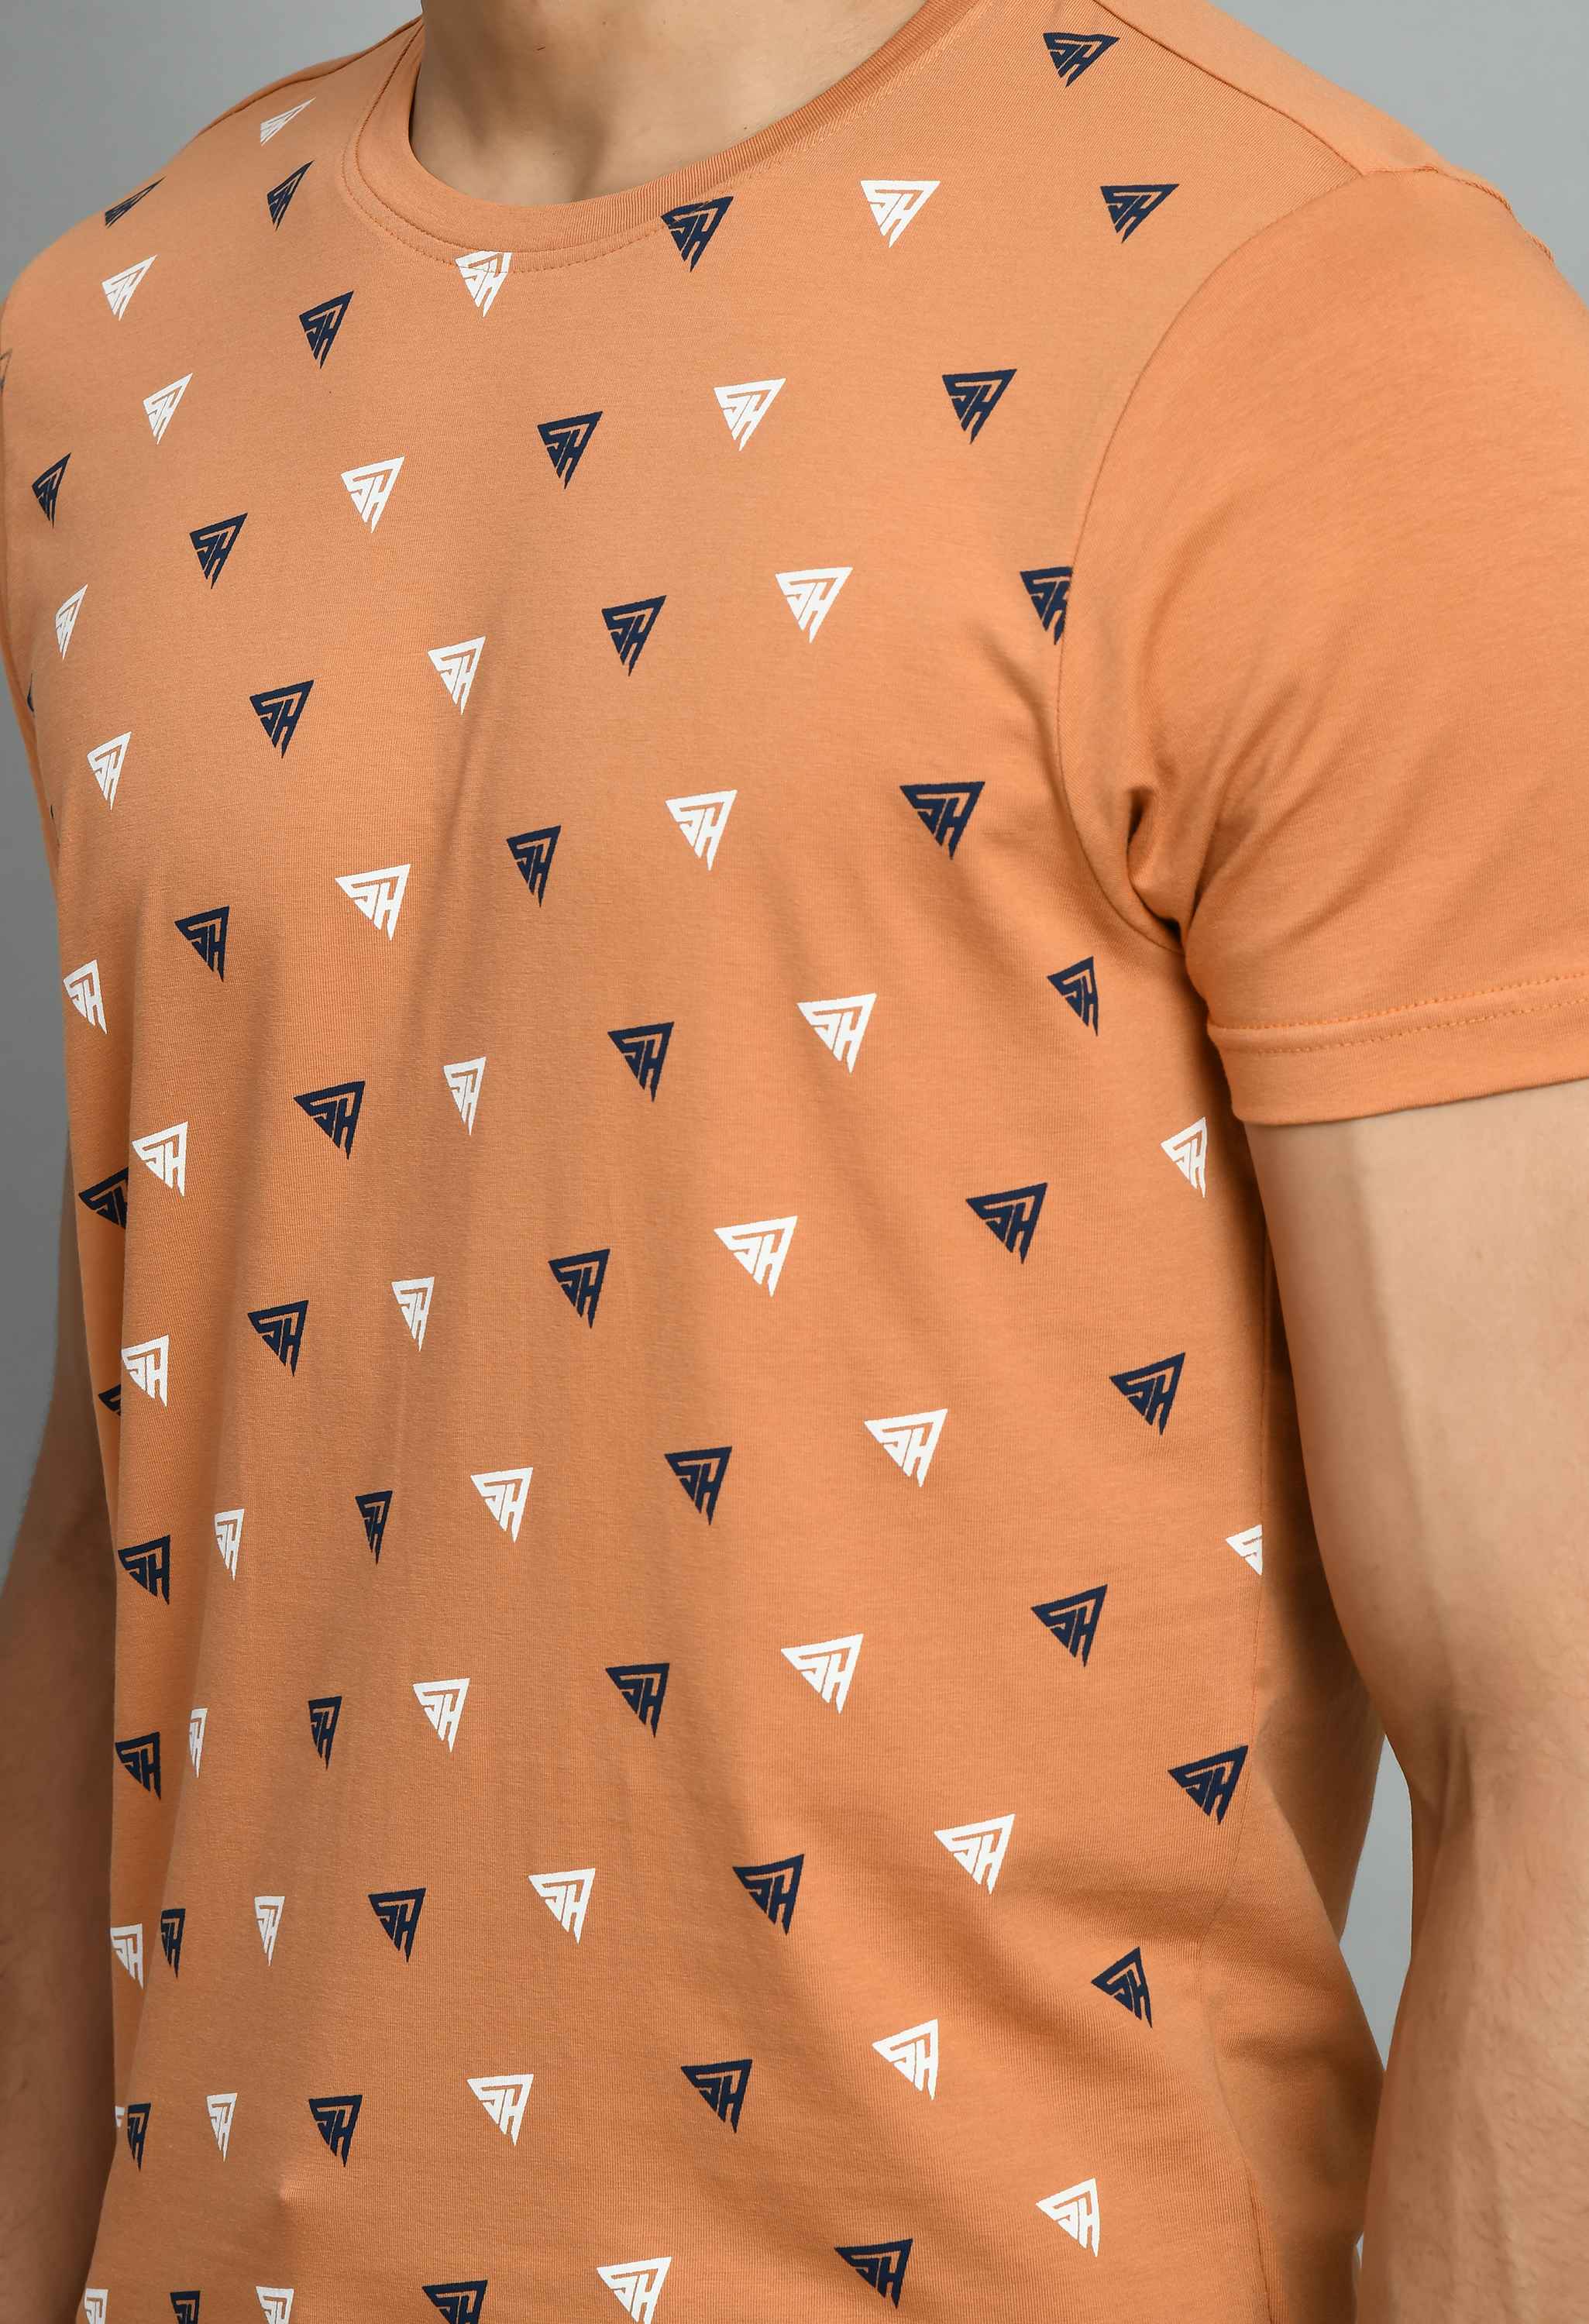 Men's Light Orange Printed T-Shirt